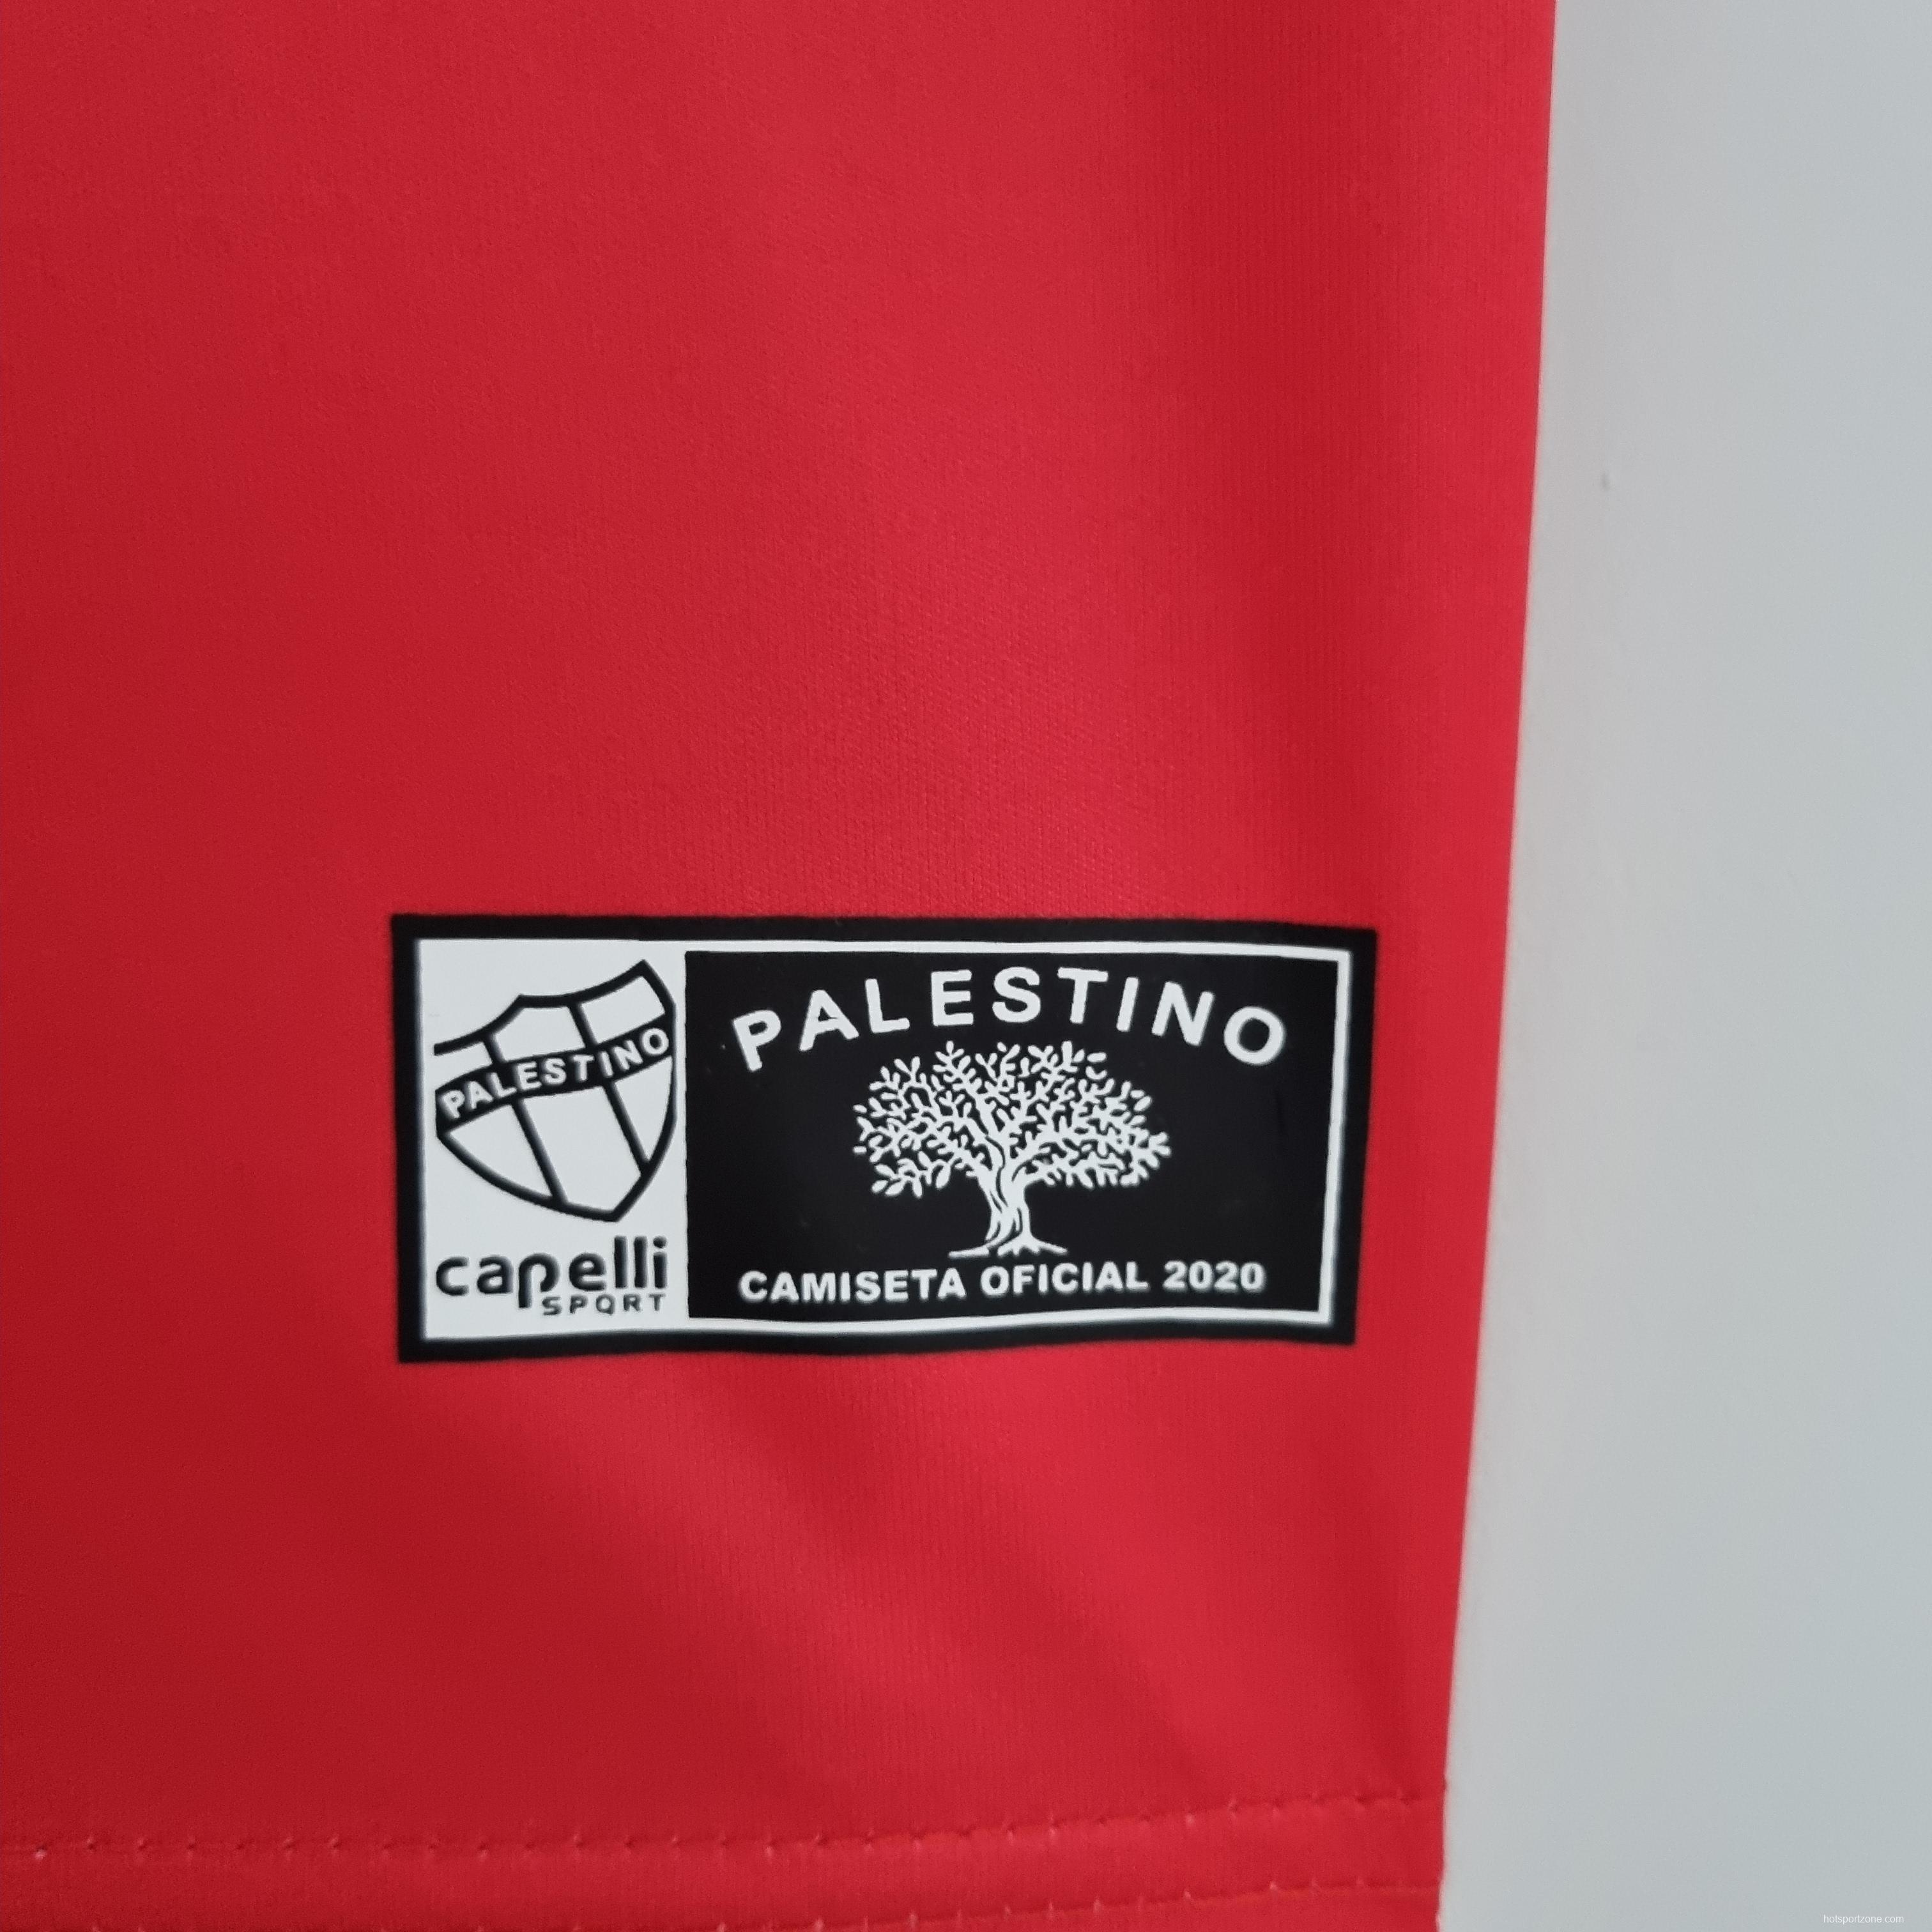 22/23 Deportivo Palestino Red Soccer Jersey